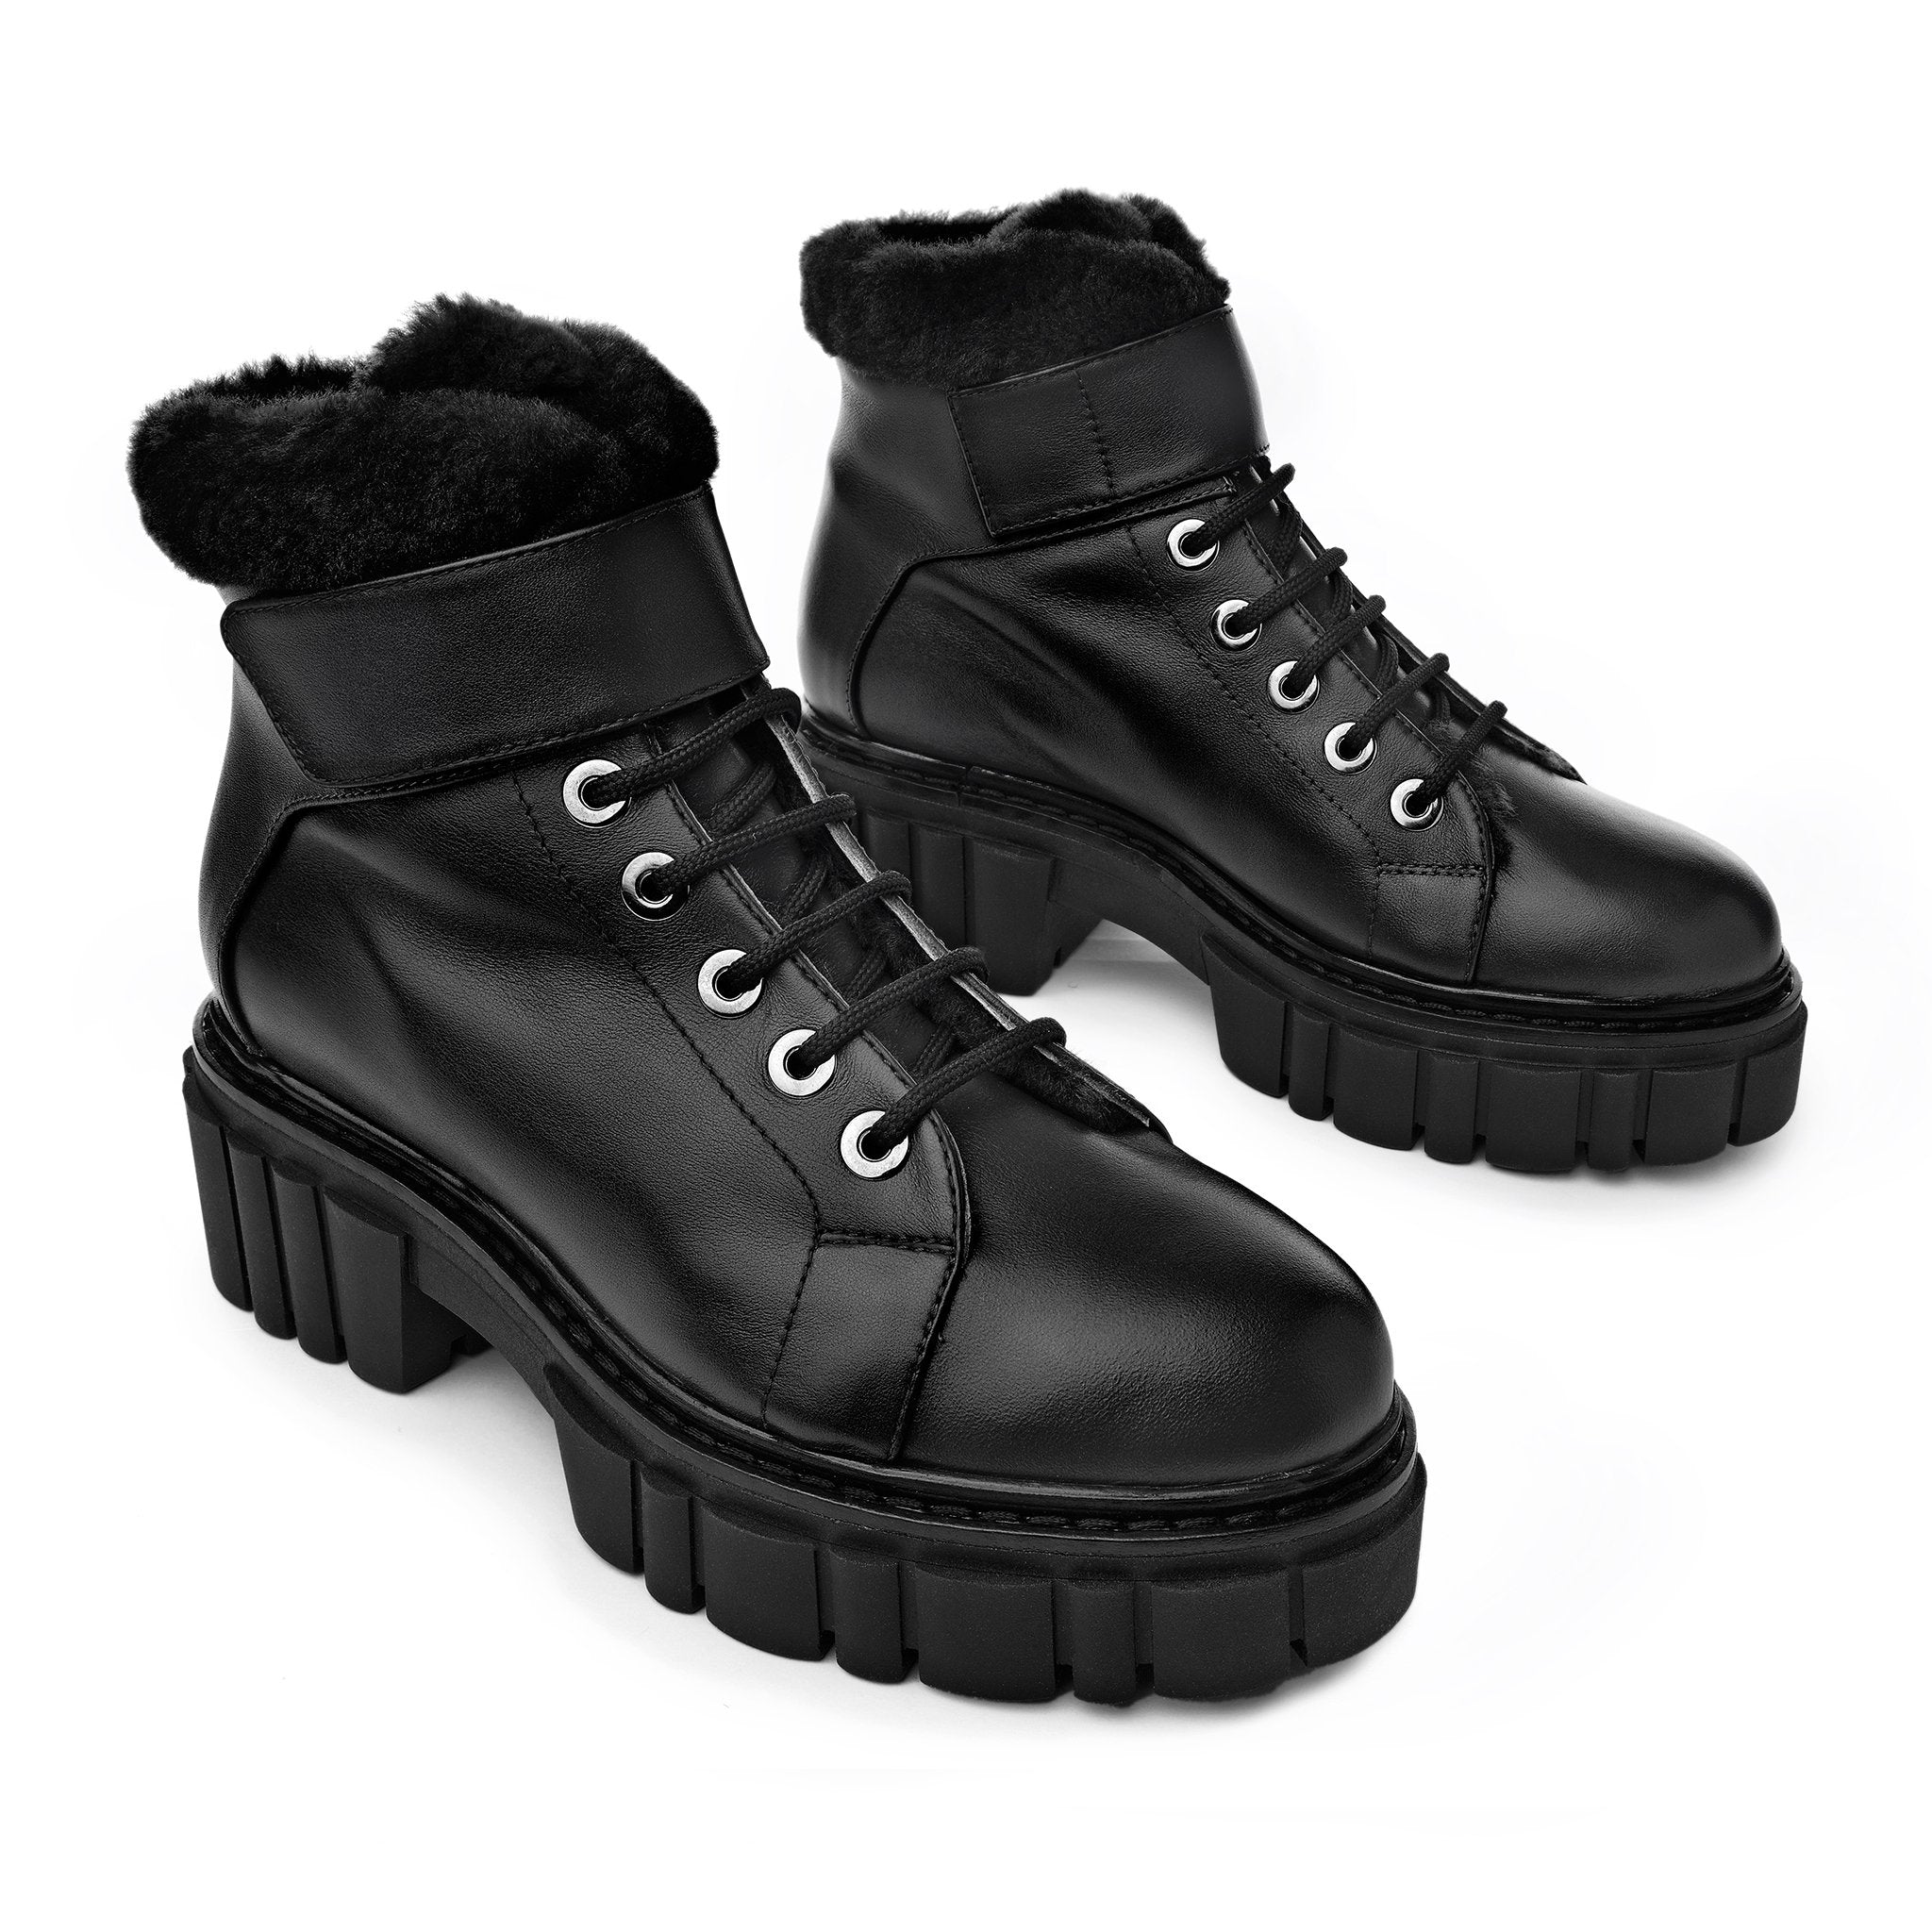 Takara Black Winter Ankle Boots 2030-01 - 3